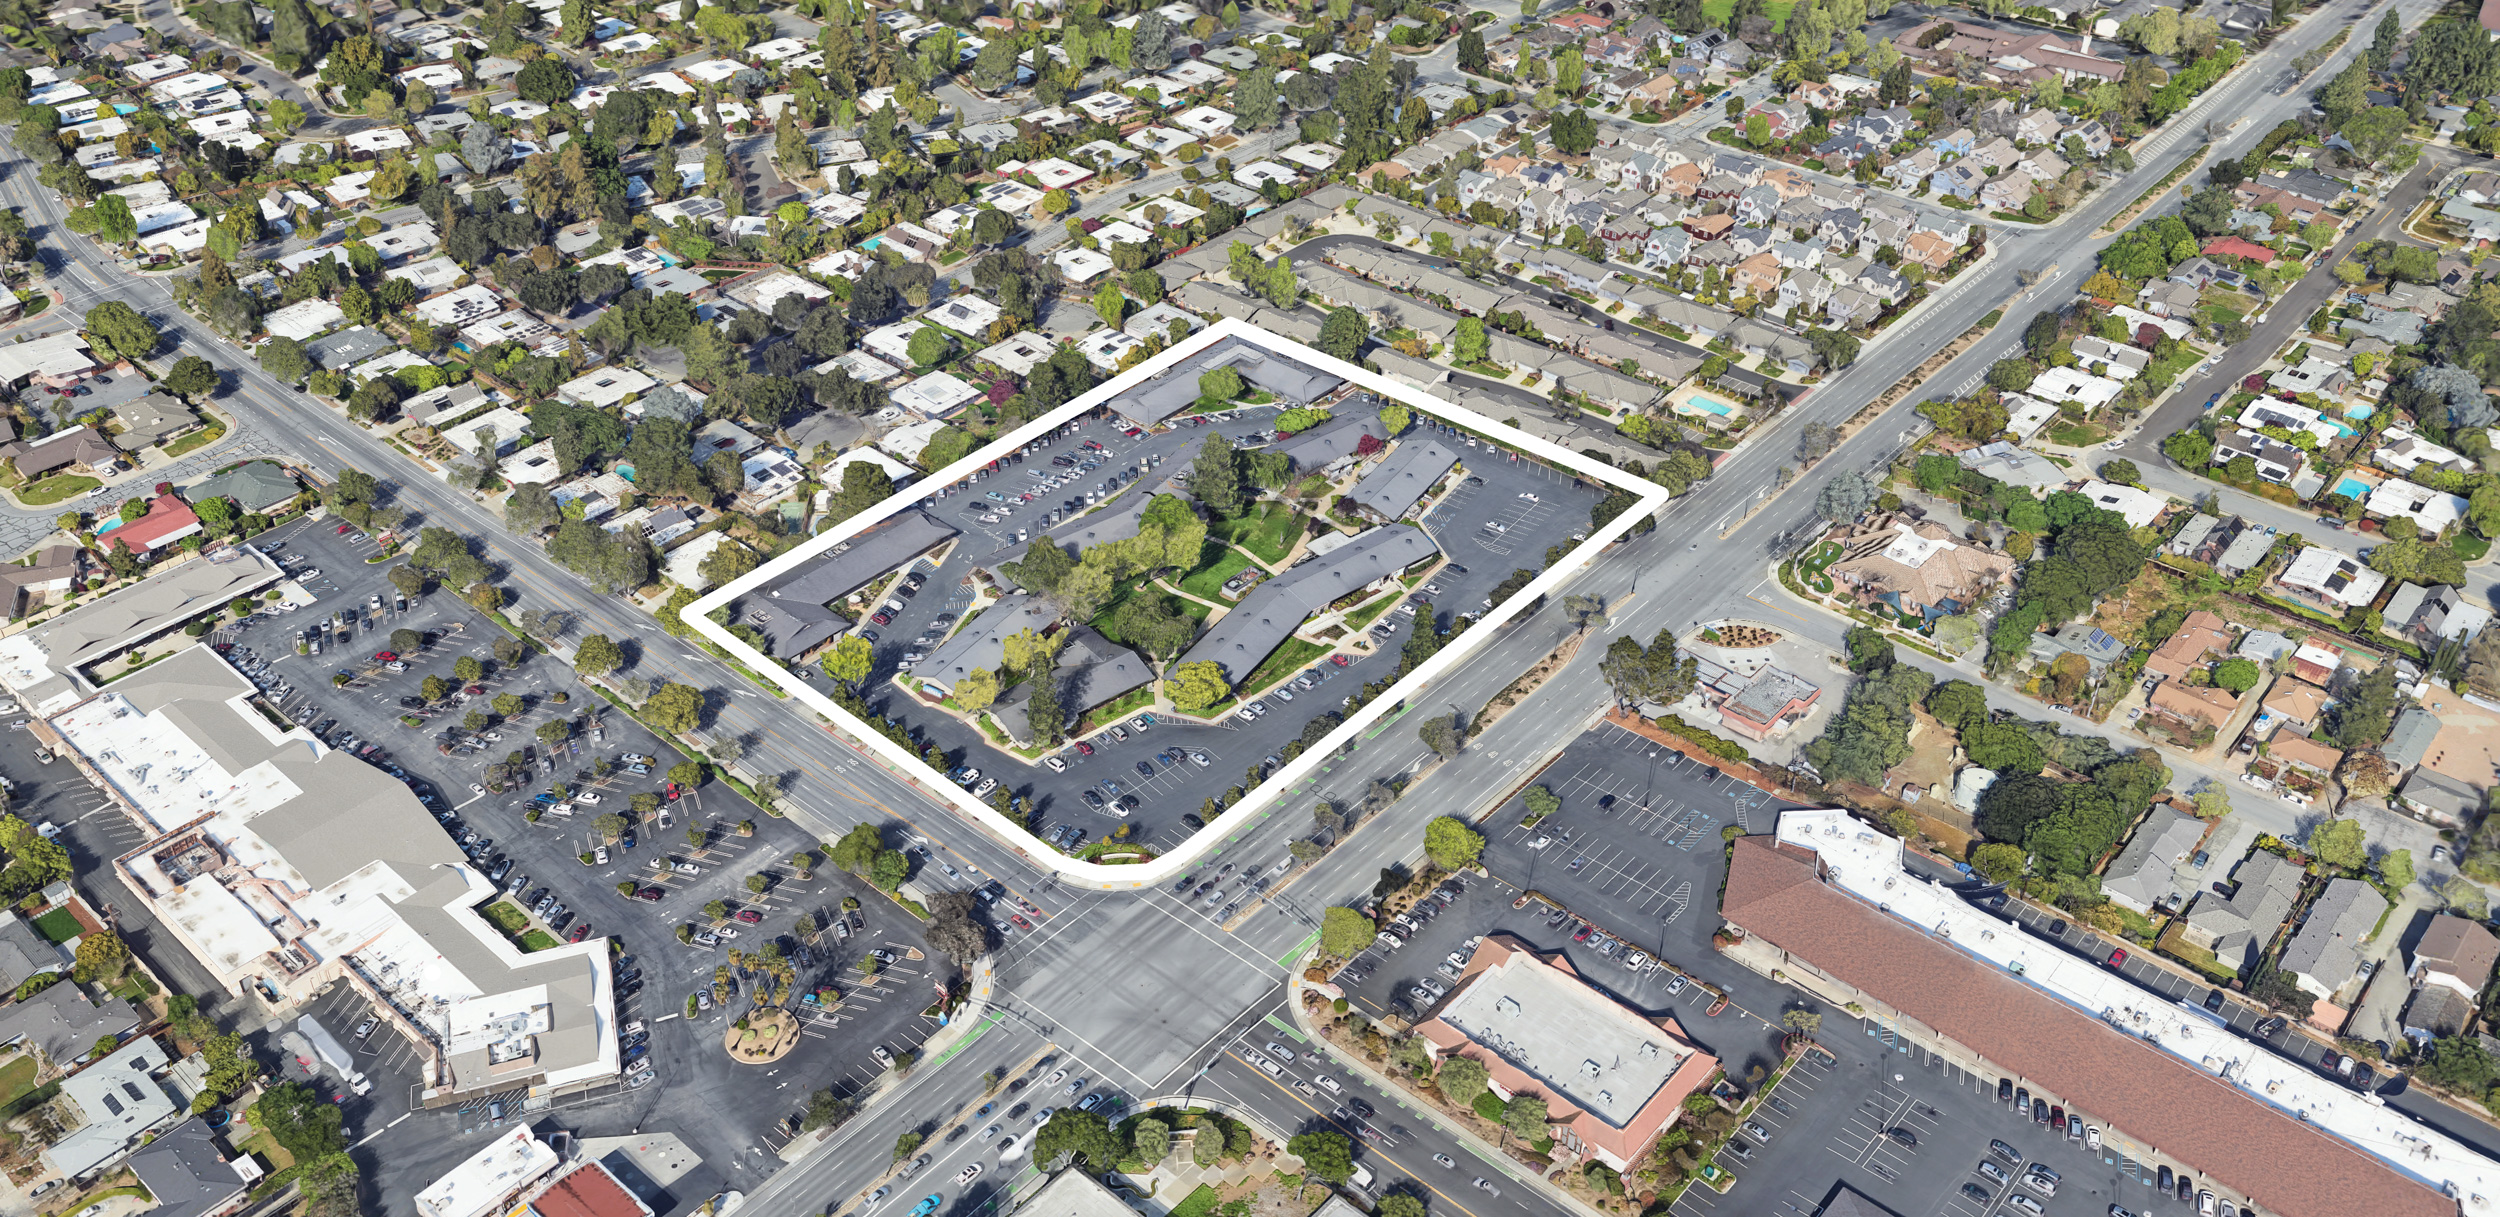 877 West Fremont Avenue, image via Google Satellite